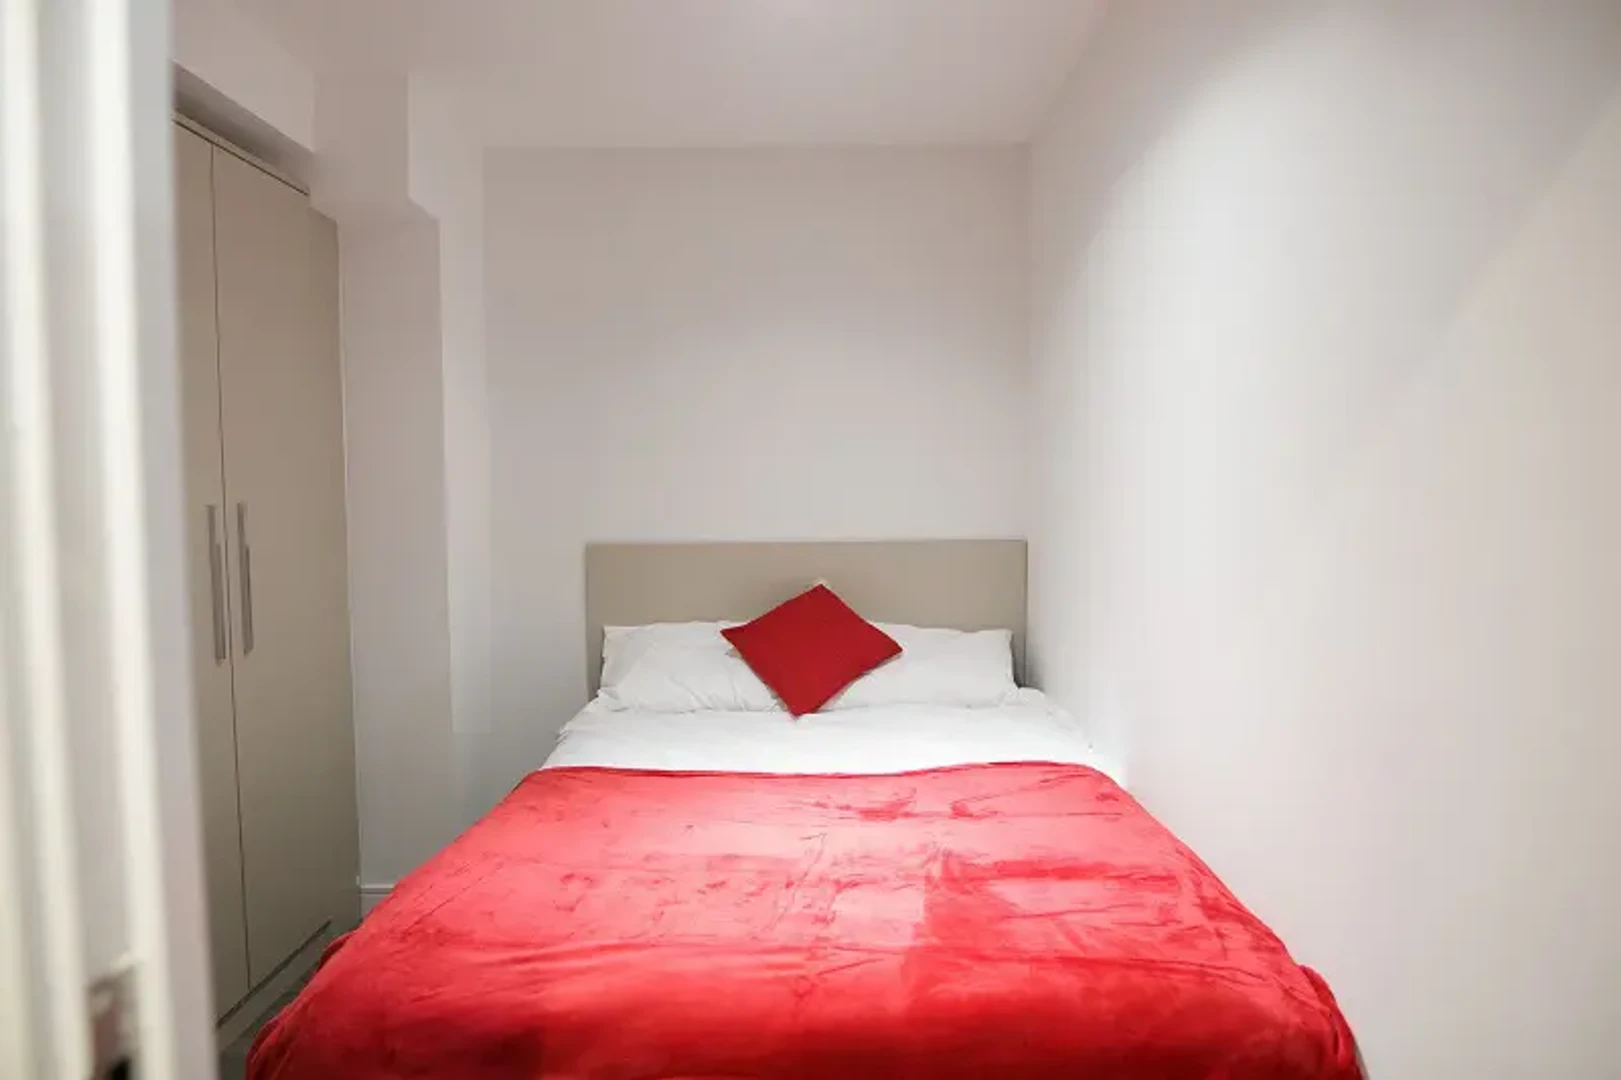 Two bedroom accommodation in Sunderland